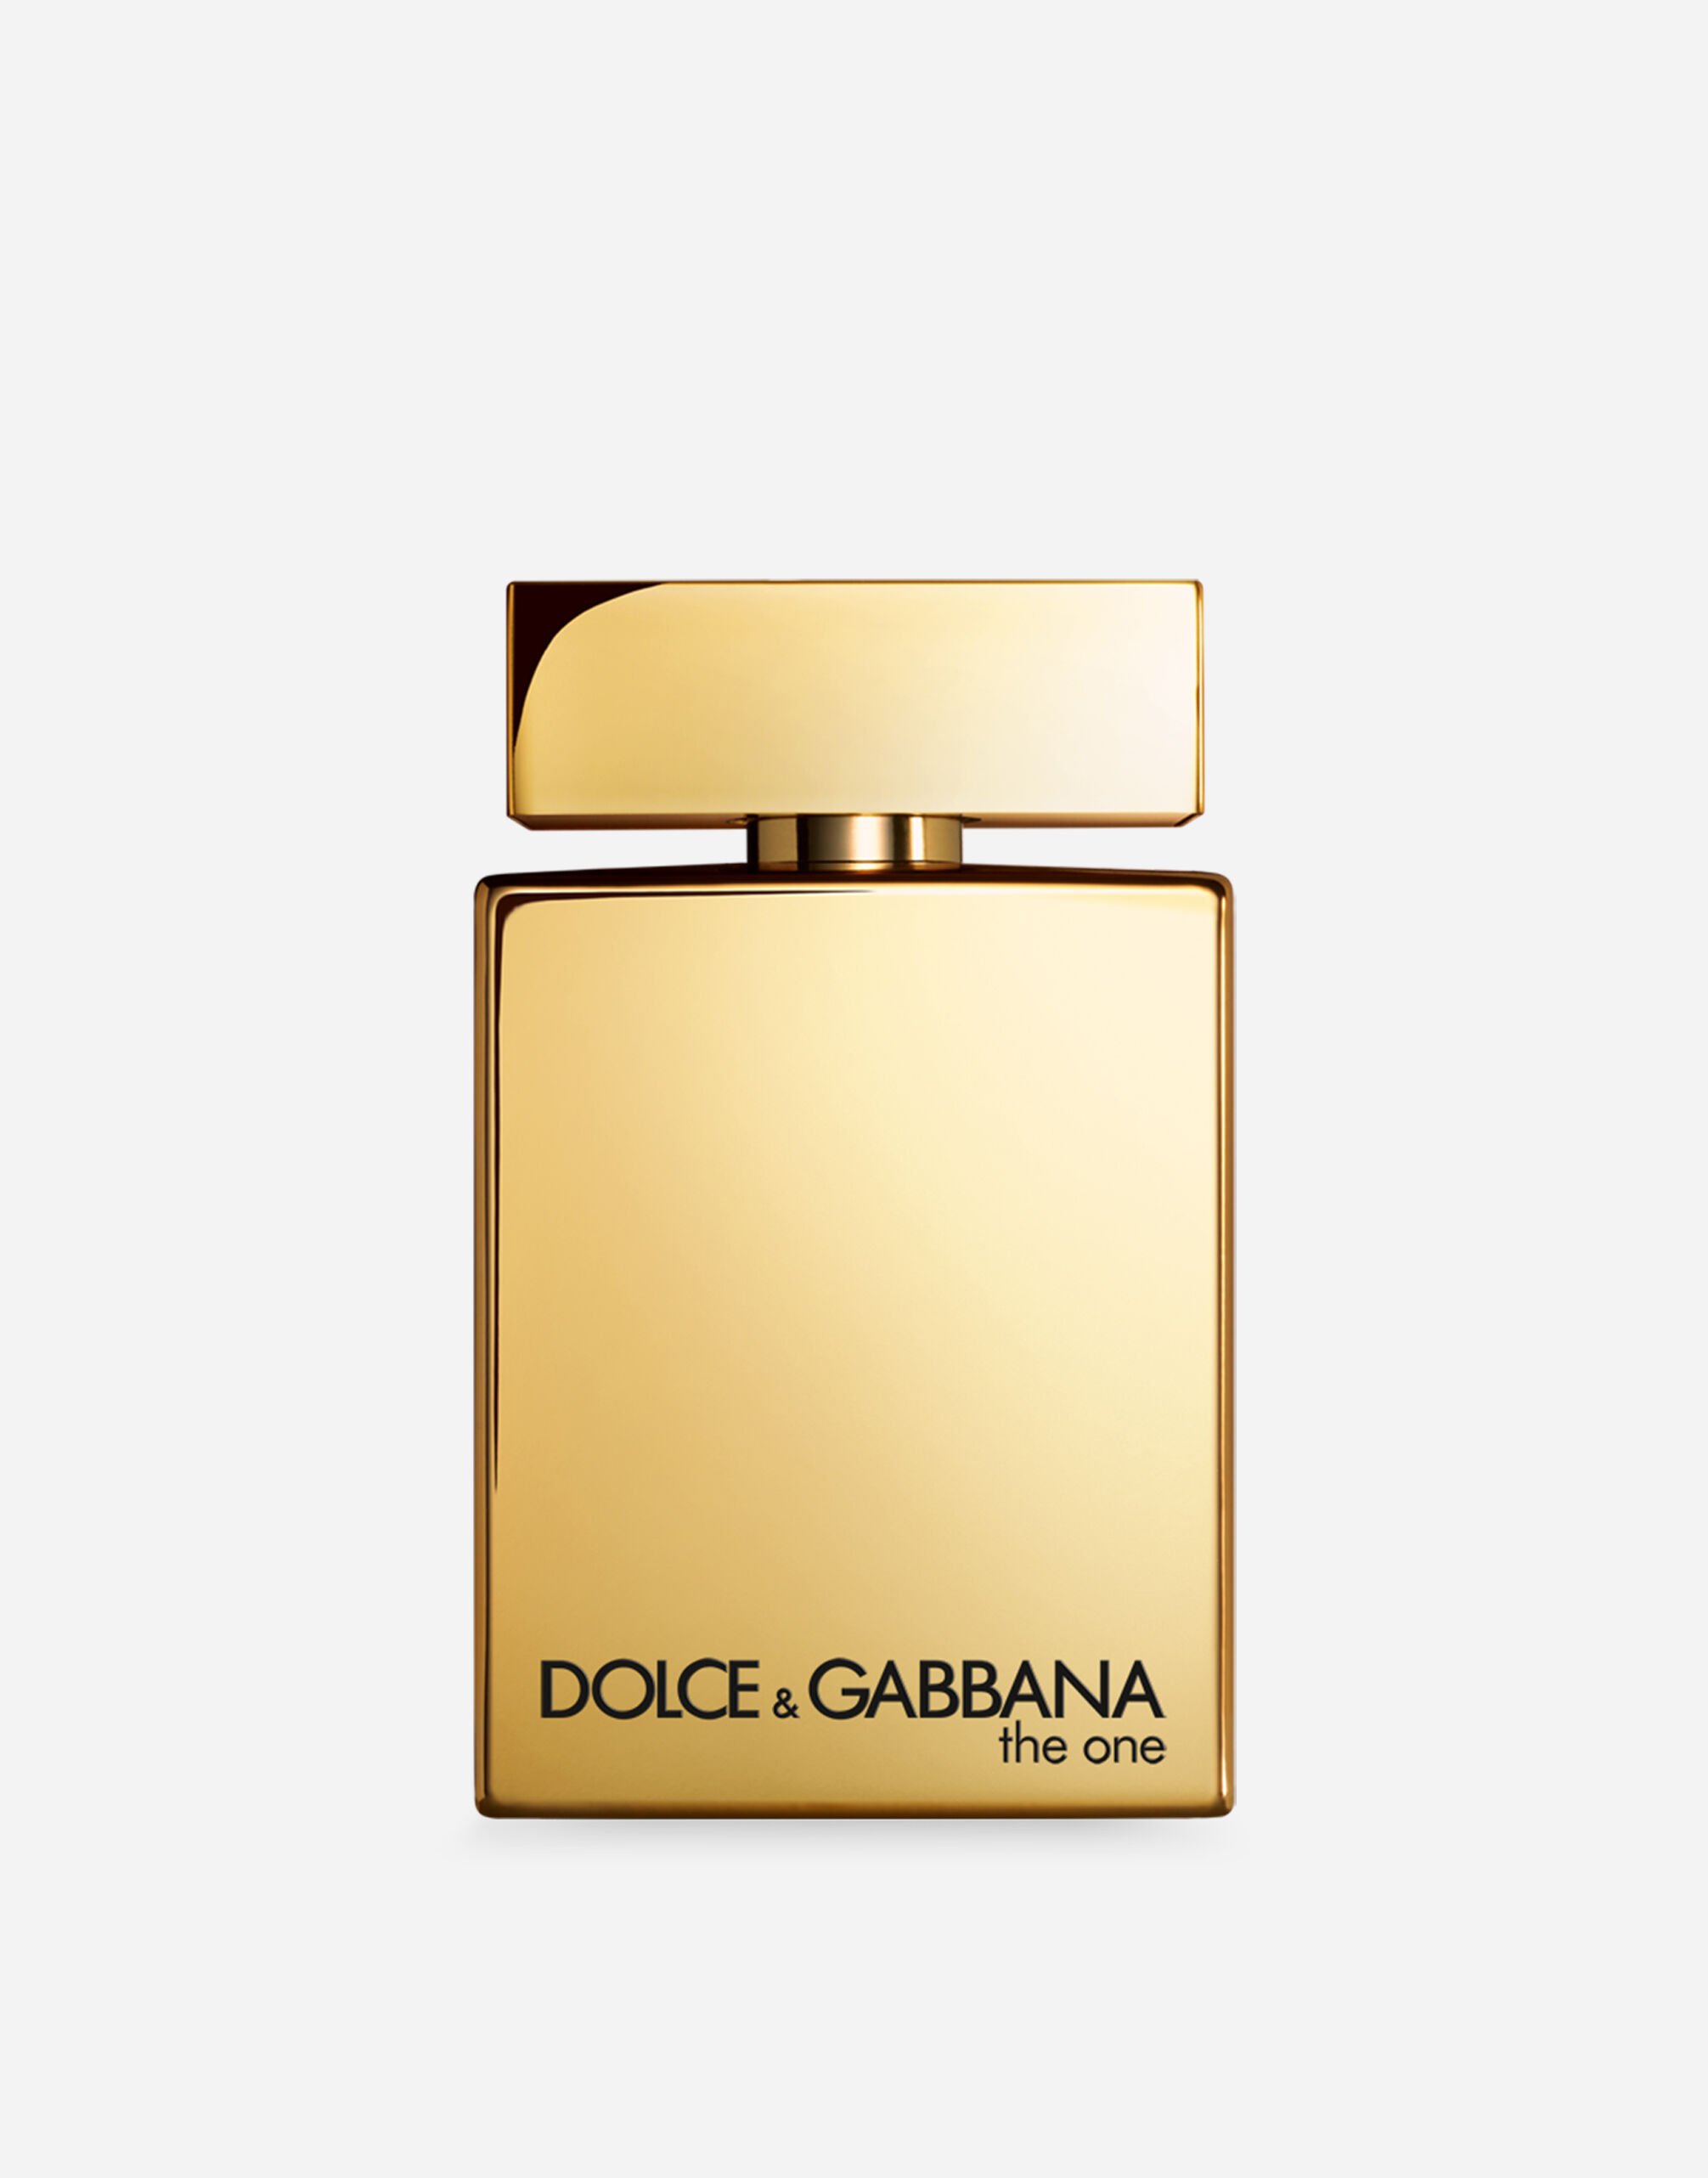 Dolce & Gabbana The One for Men Gold Eau de Parfum Intense - VT0063VT000